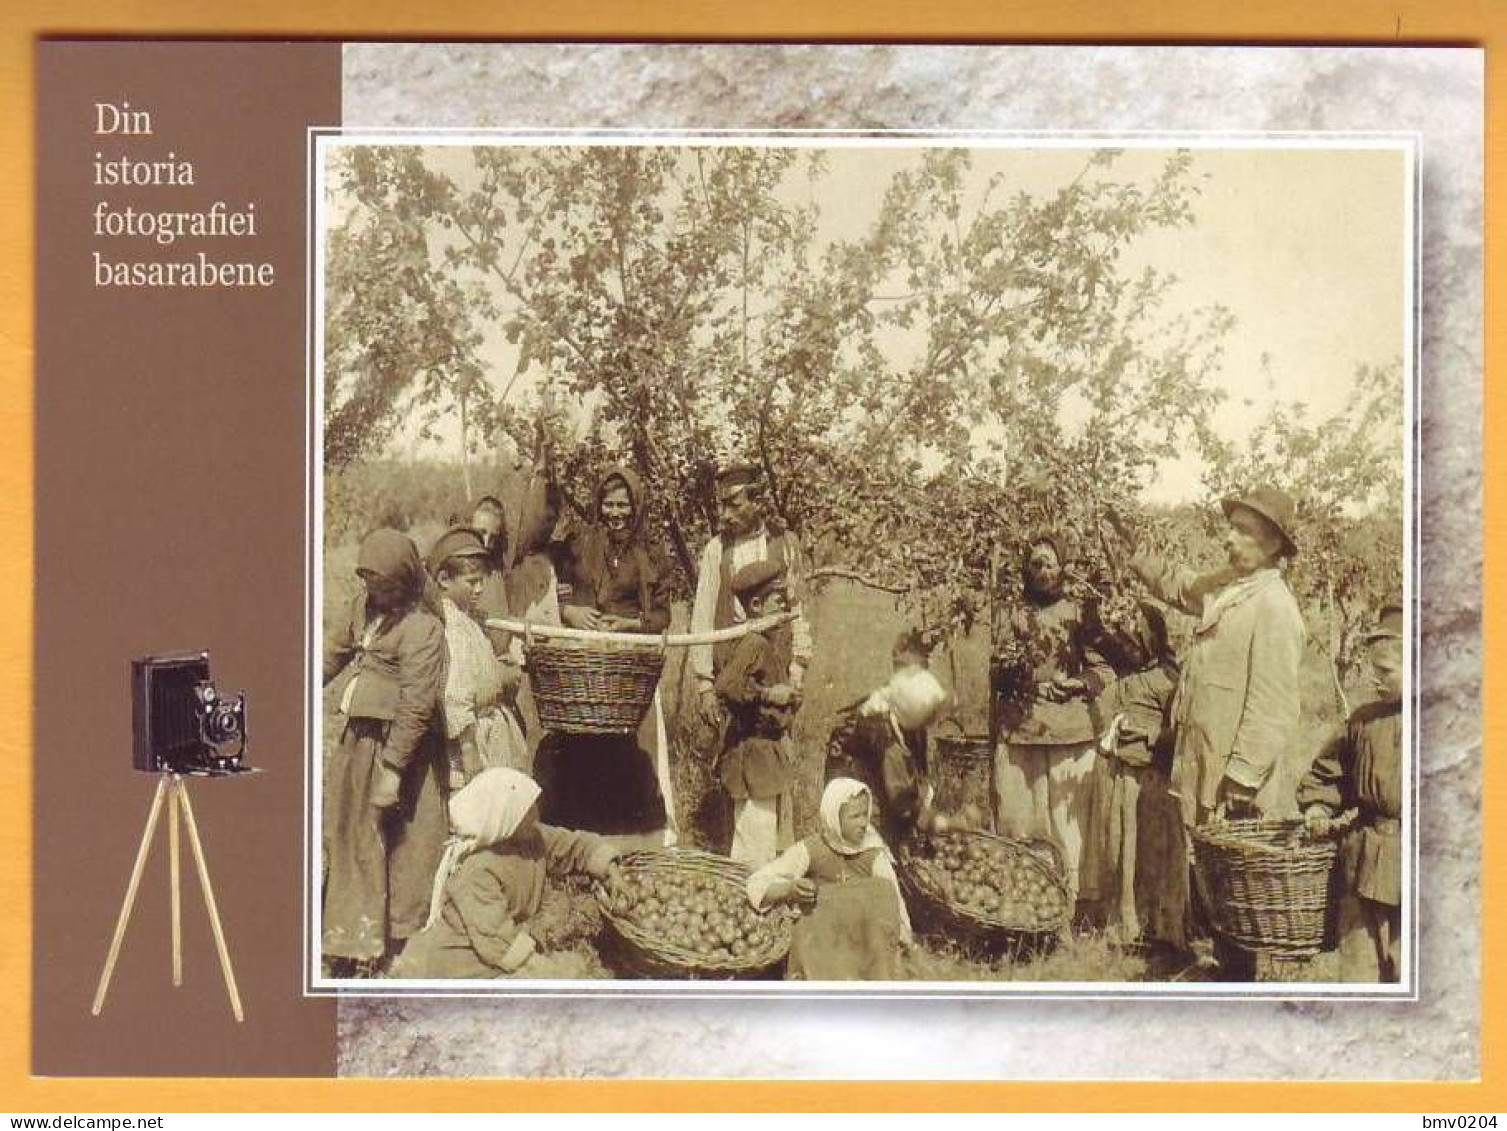 2014 Moldova  Postcard. Fruit Collection. The Village Of Speia. Basarabia. Osterman. The Museum. Apples. - Moldawien (Moldova)